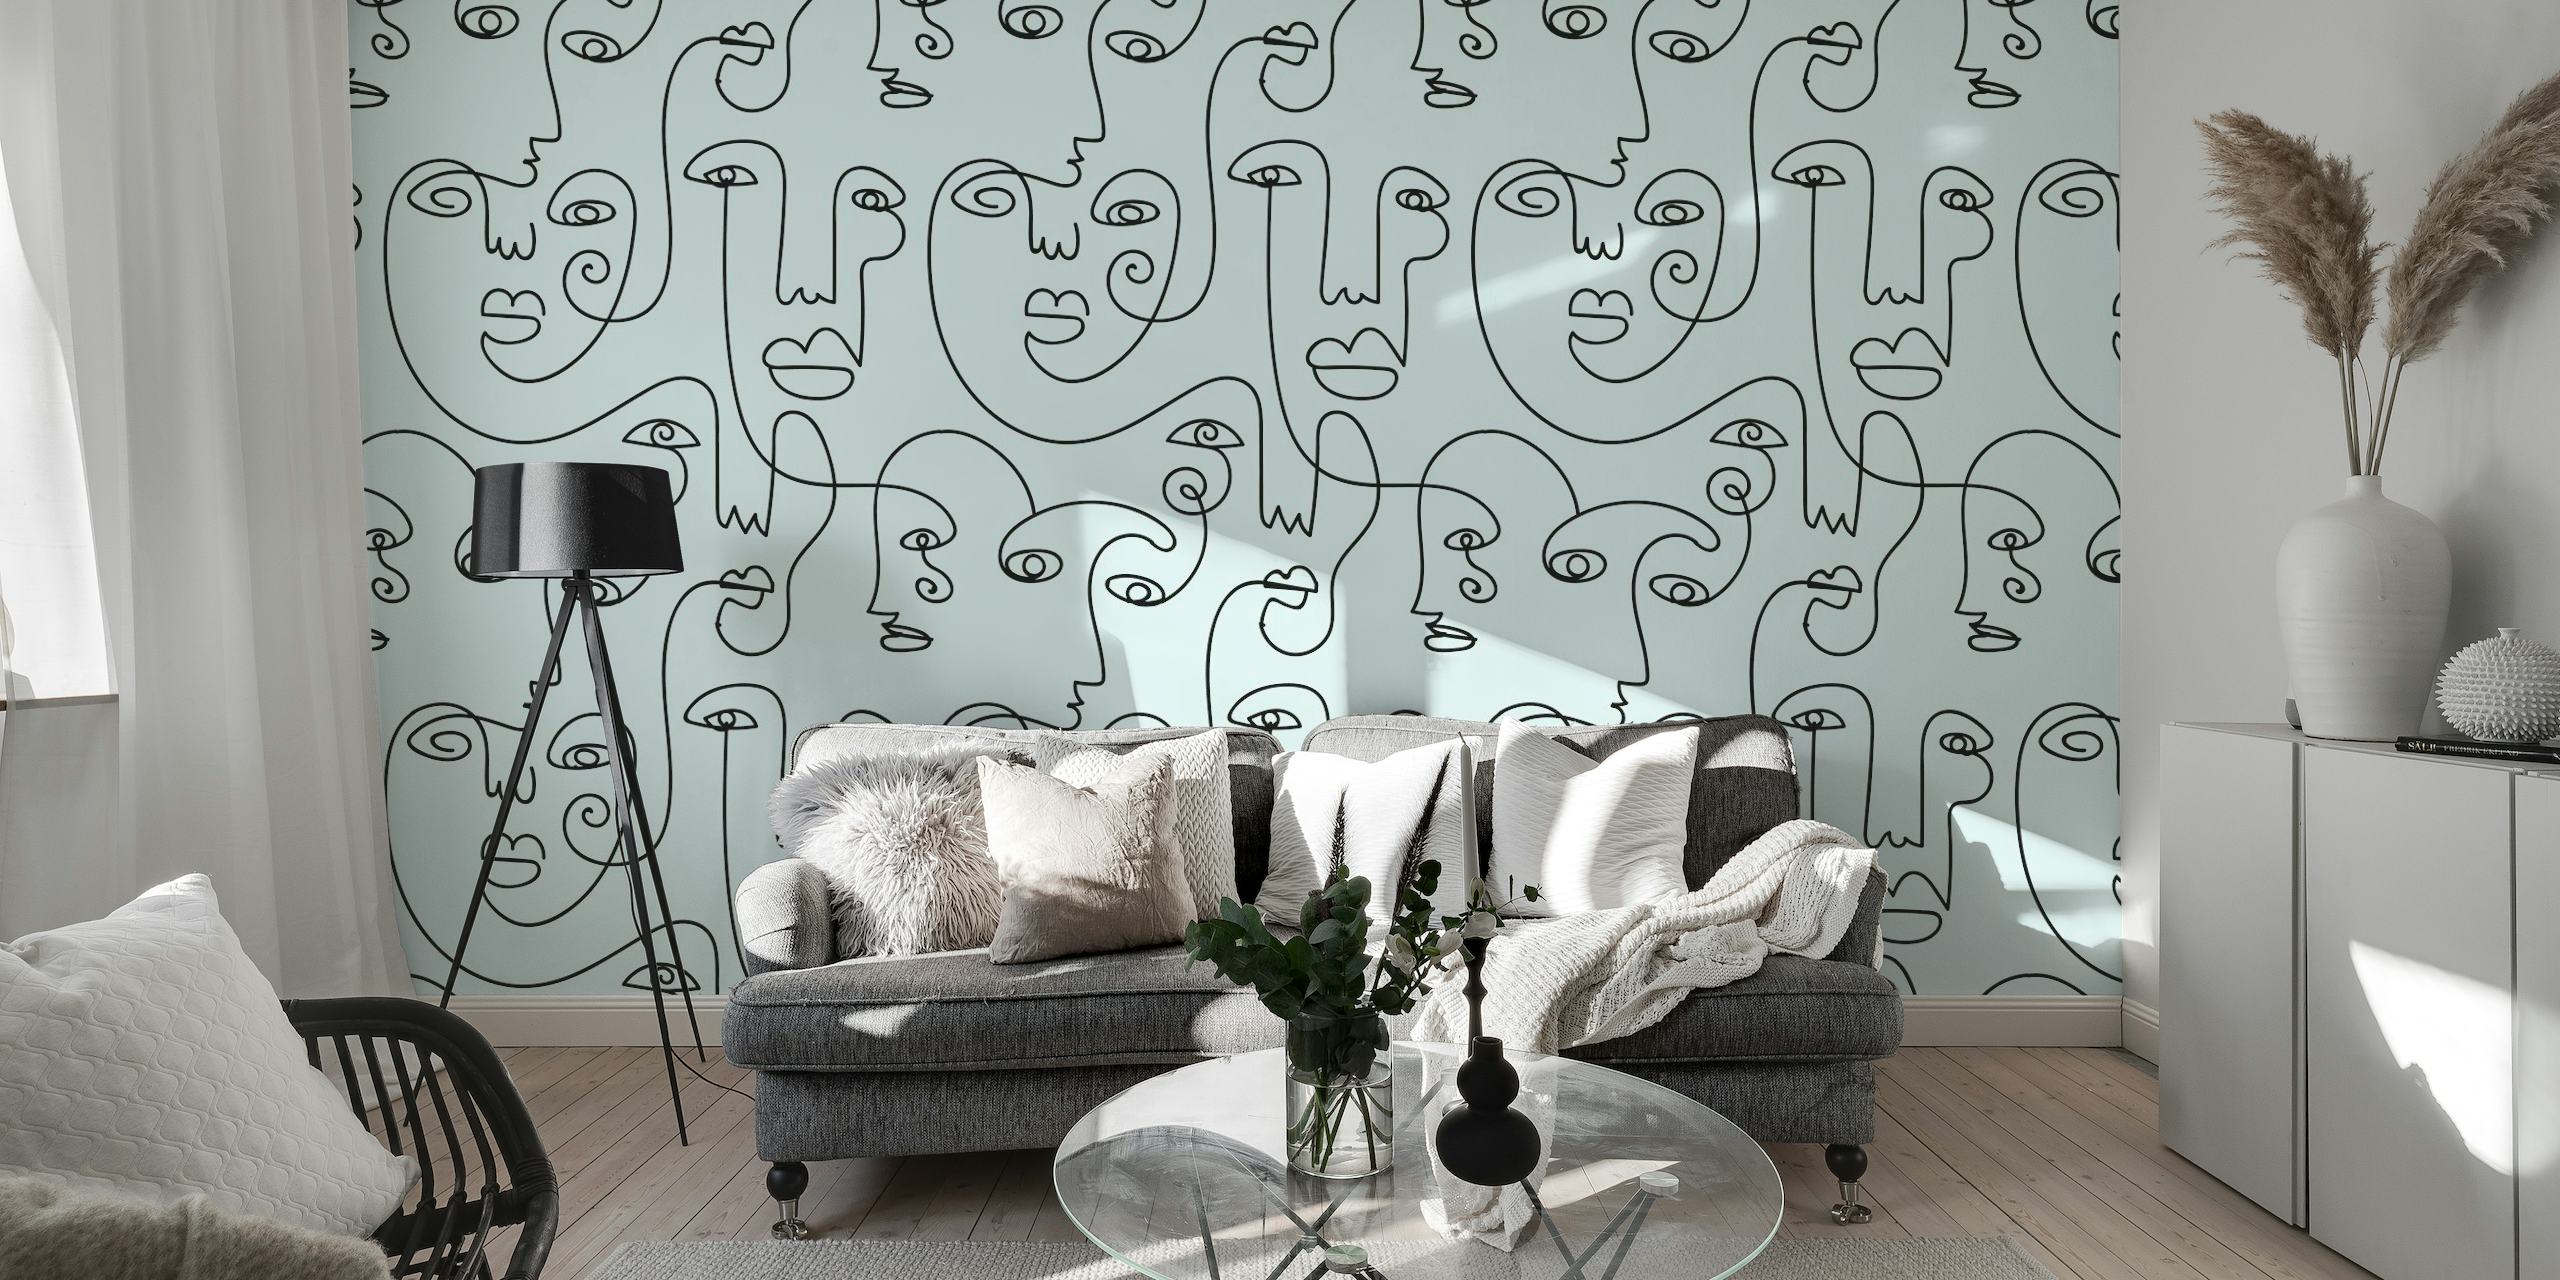 Arte lineal abstracto inspirado en Picasso que presenta siluetas femeninas en un patrón continuo en un mural de pared